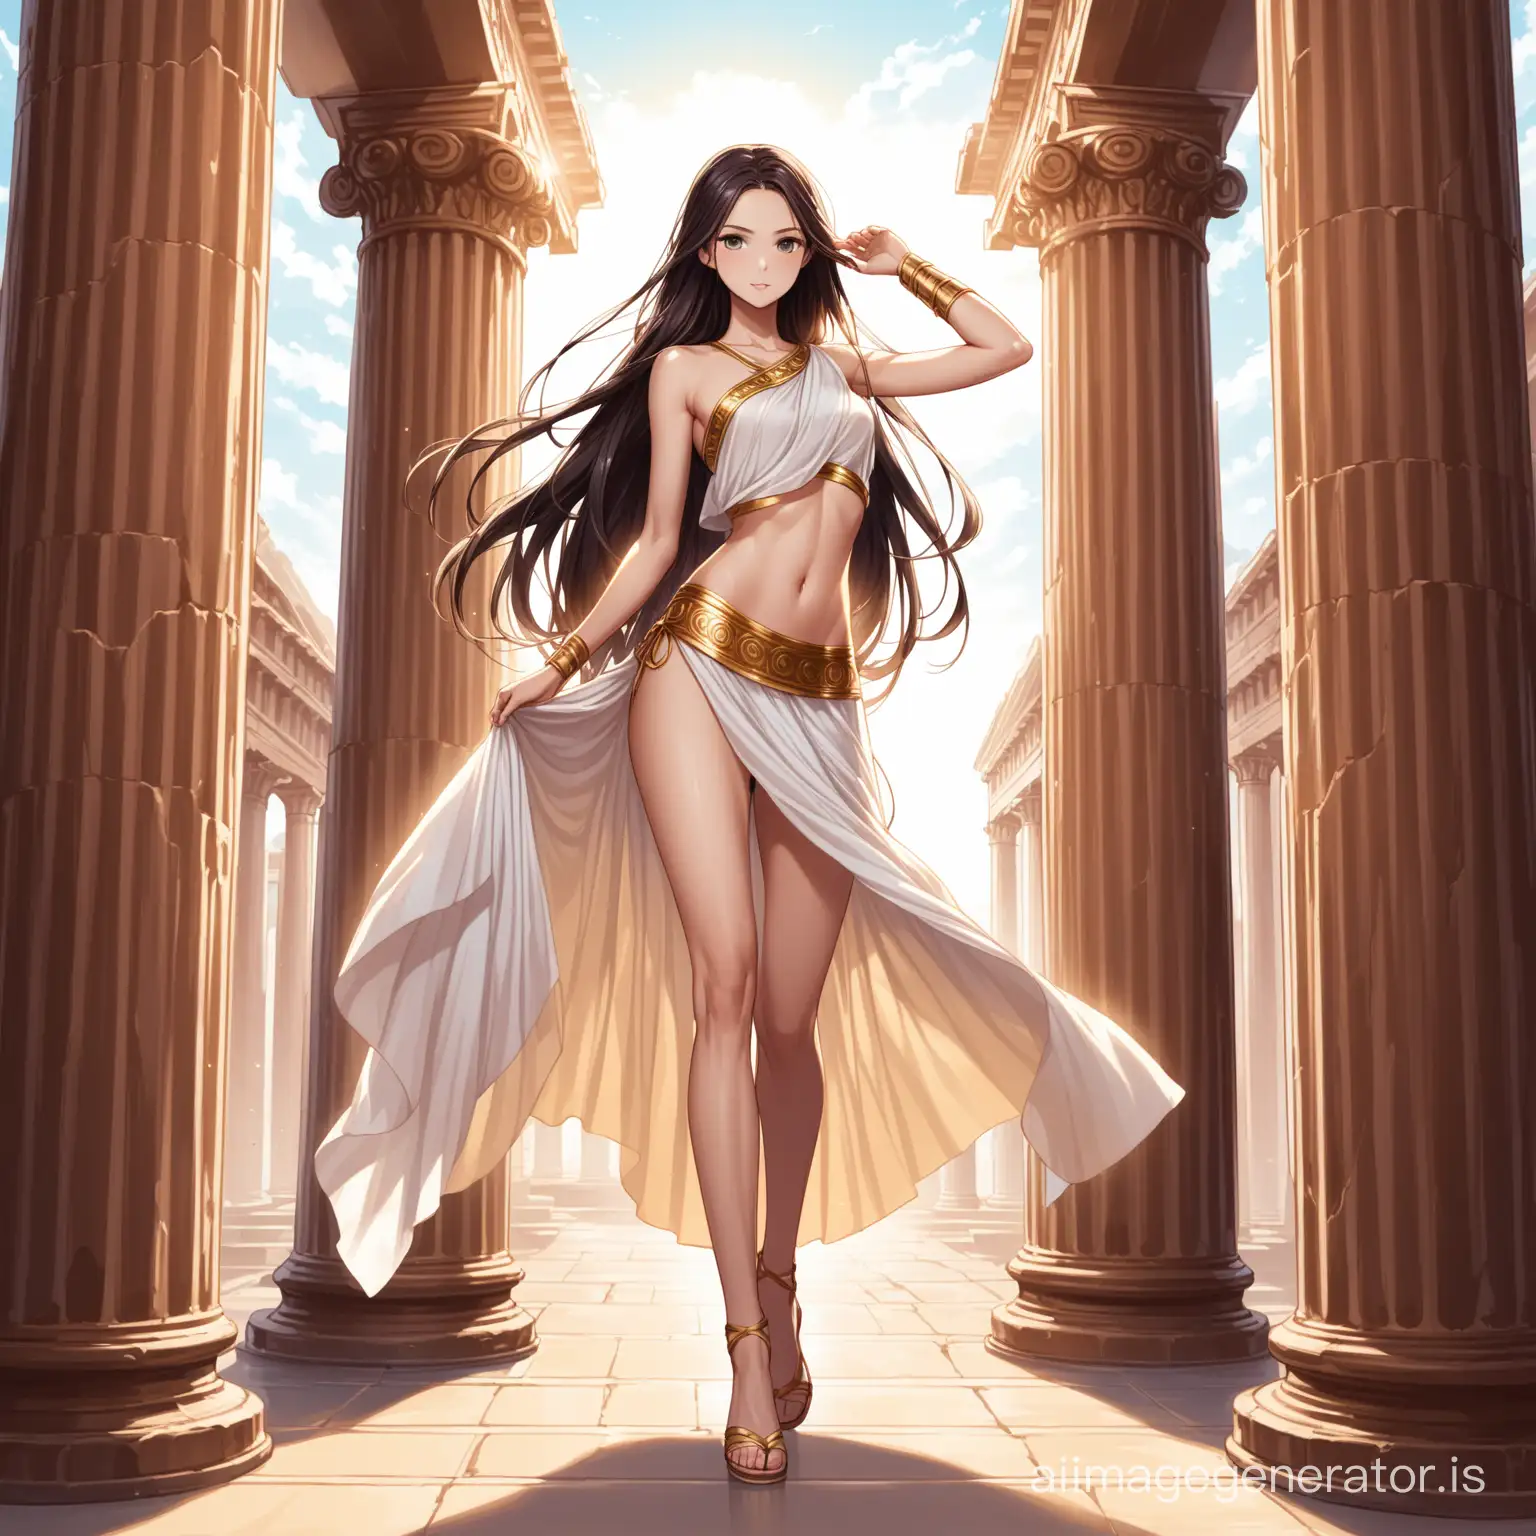 Elegant-Woman-in-Sheer-Toga-Amidst-Classical-Roman-Pillars